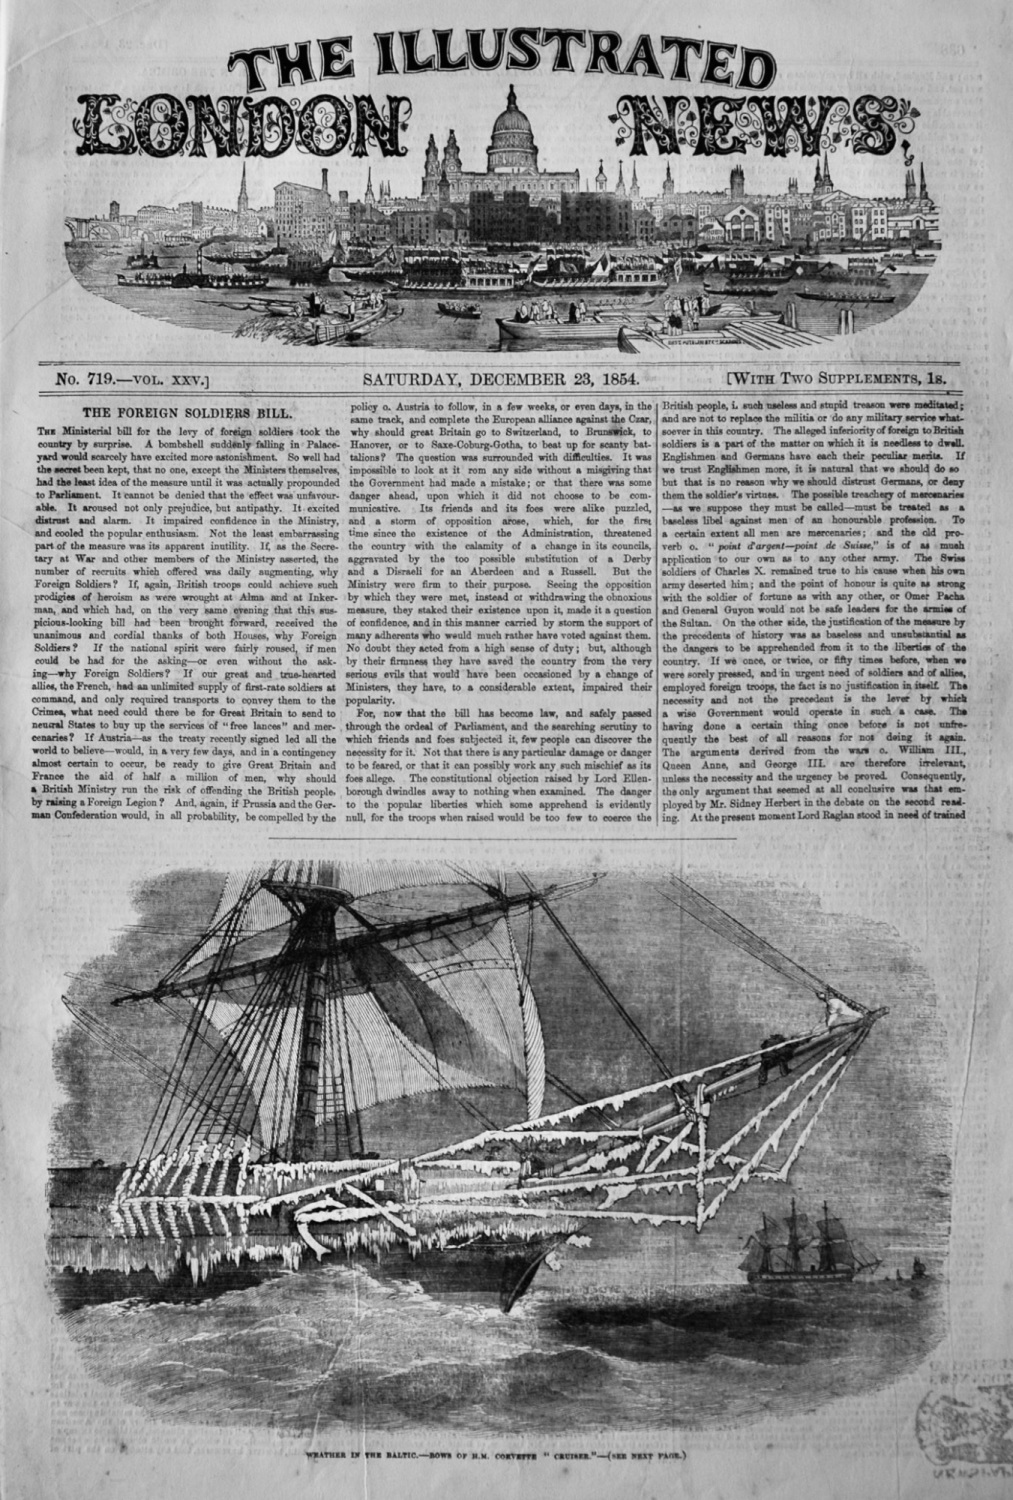 Illustrated London News, December 23rd, 1854.